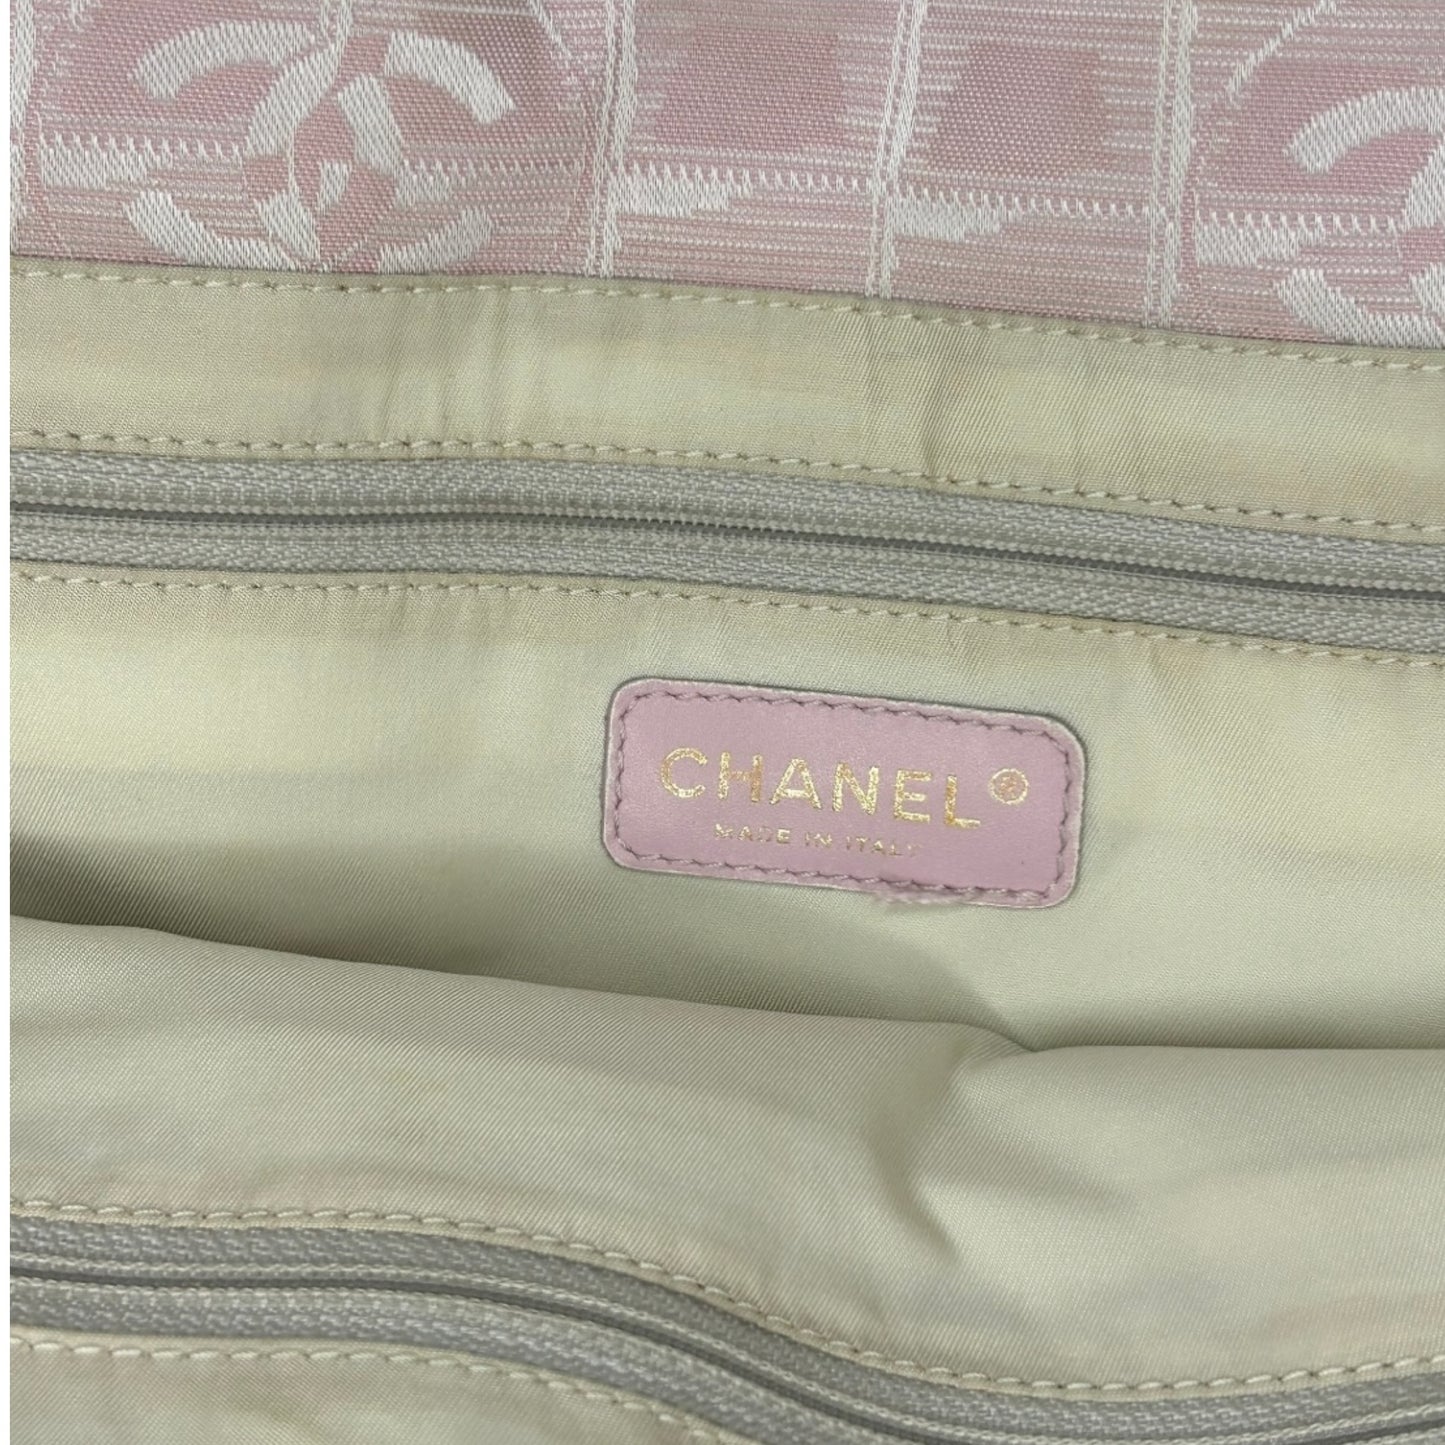 Vintage Chanel new travel line tote bag